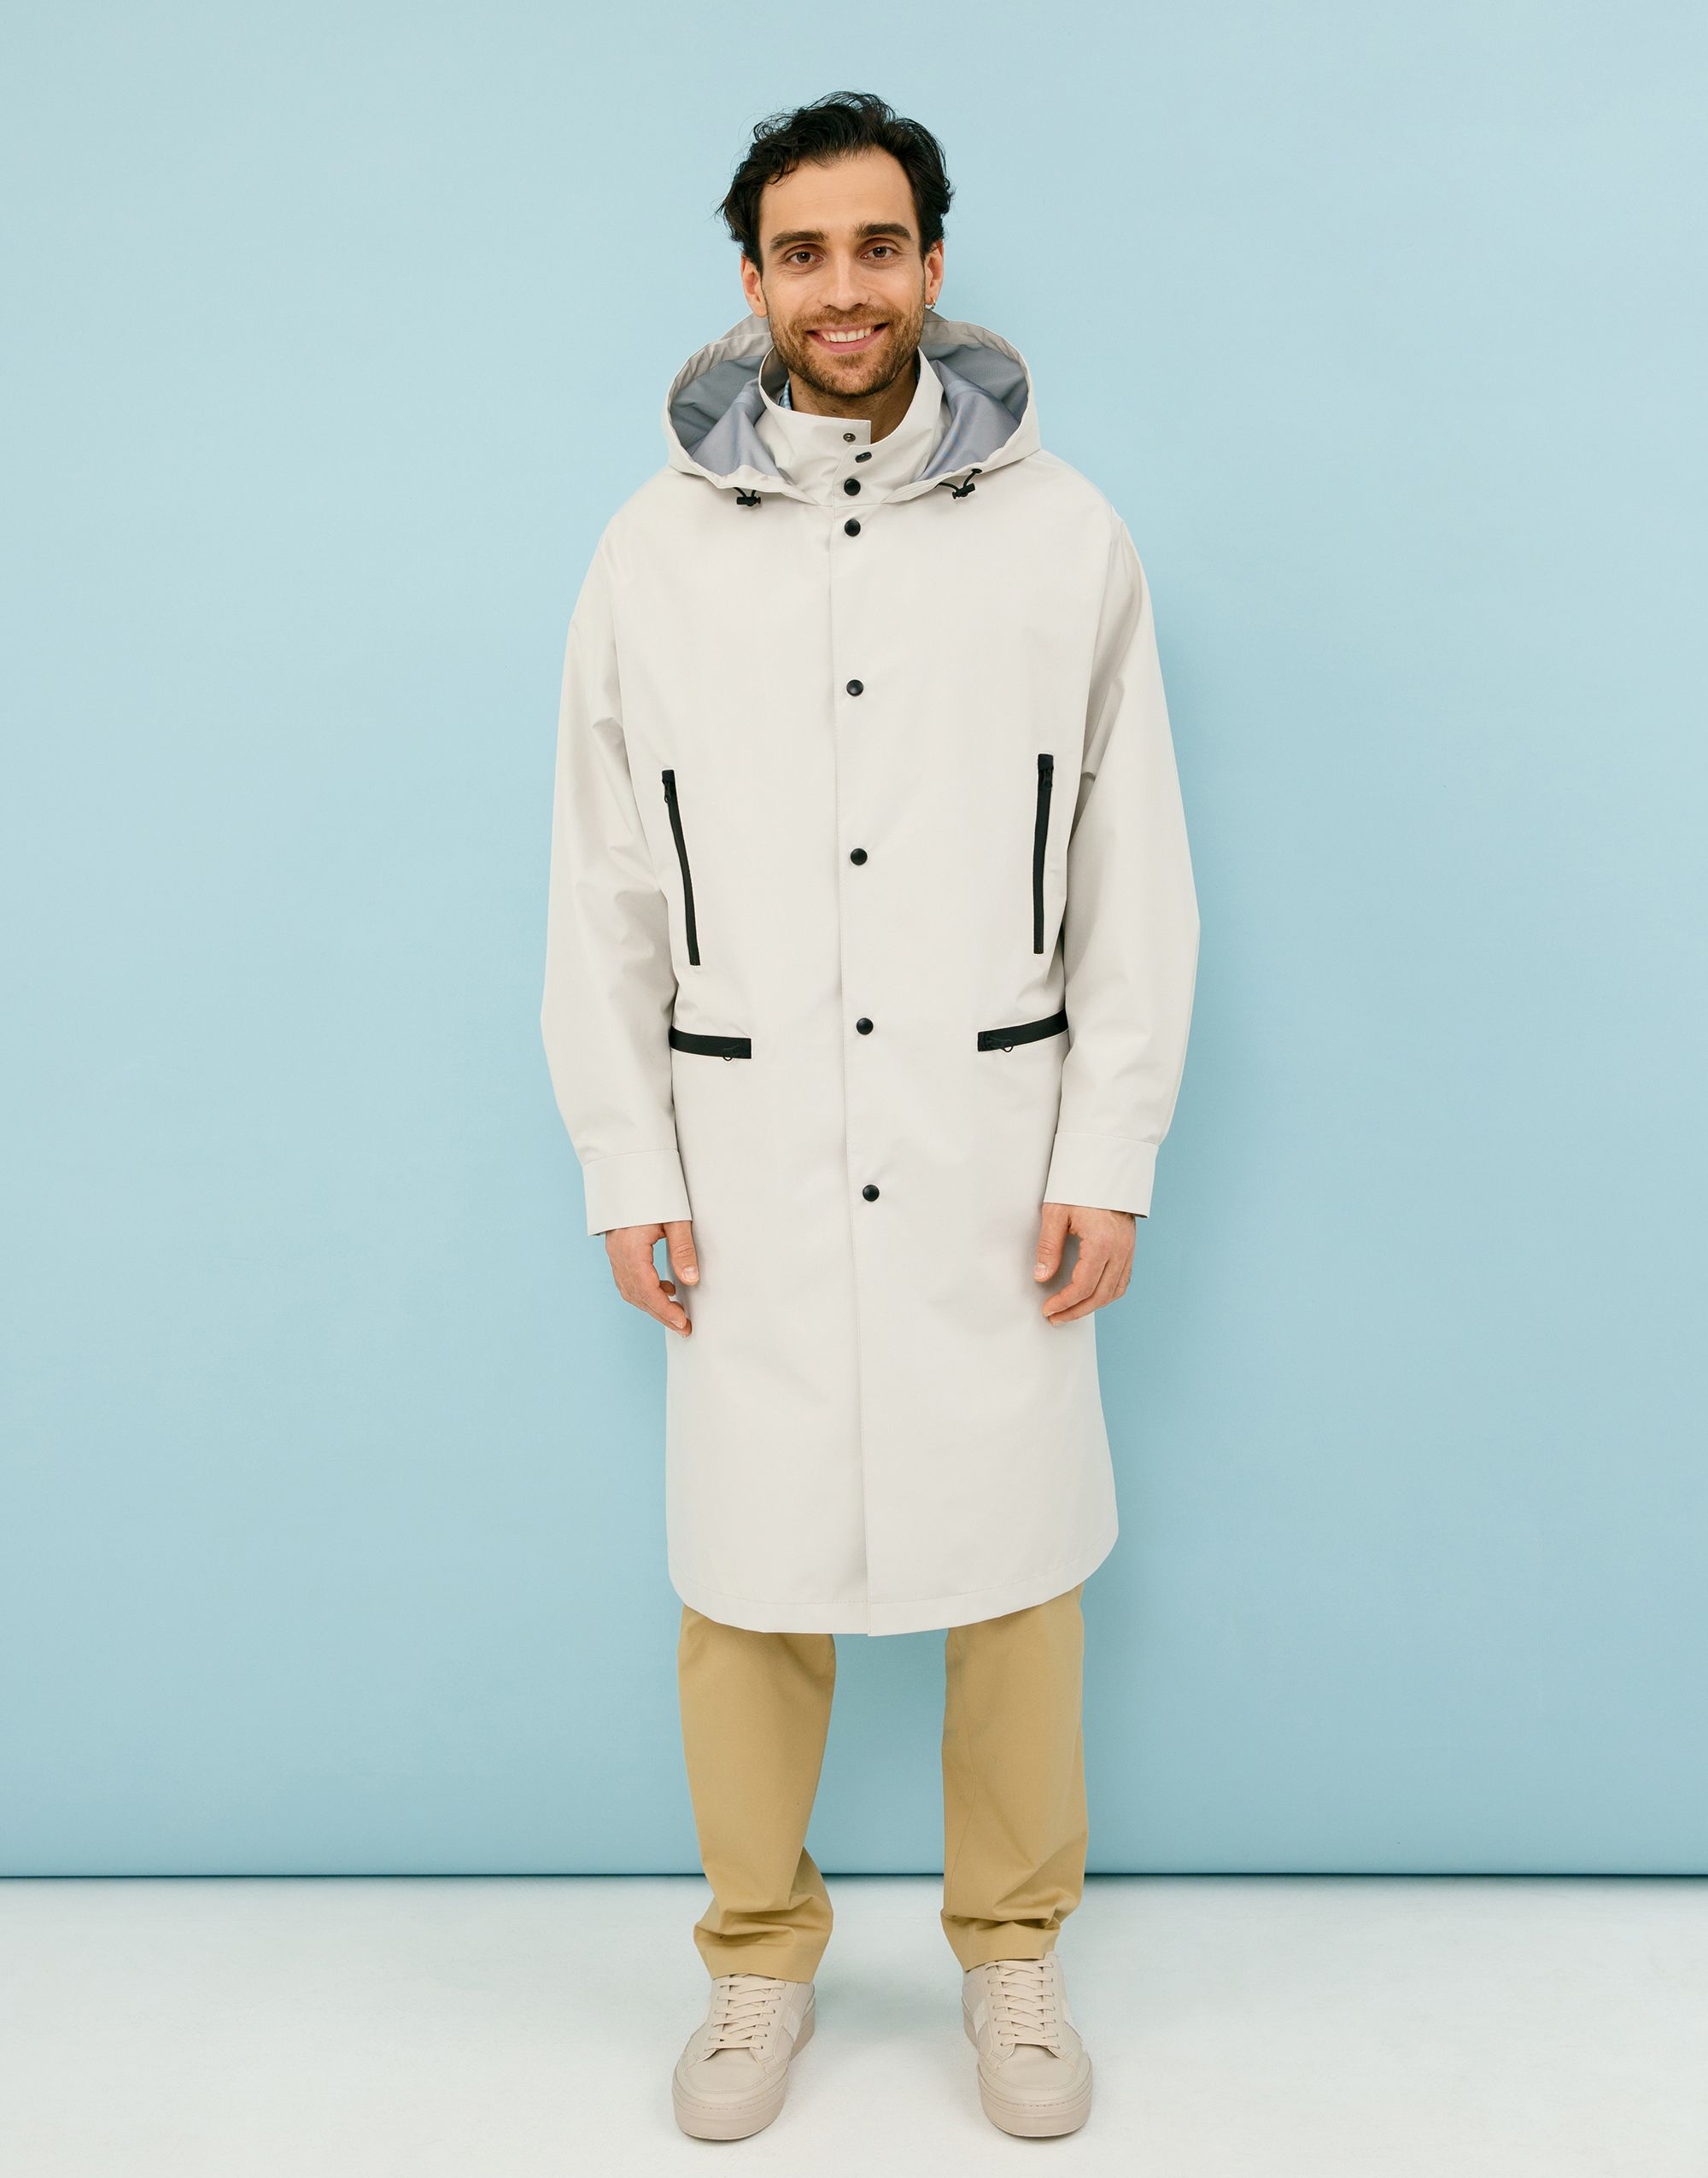 Men’s raincoat, pattern №823